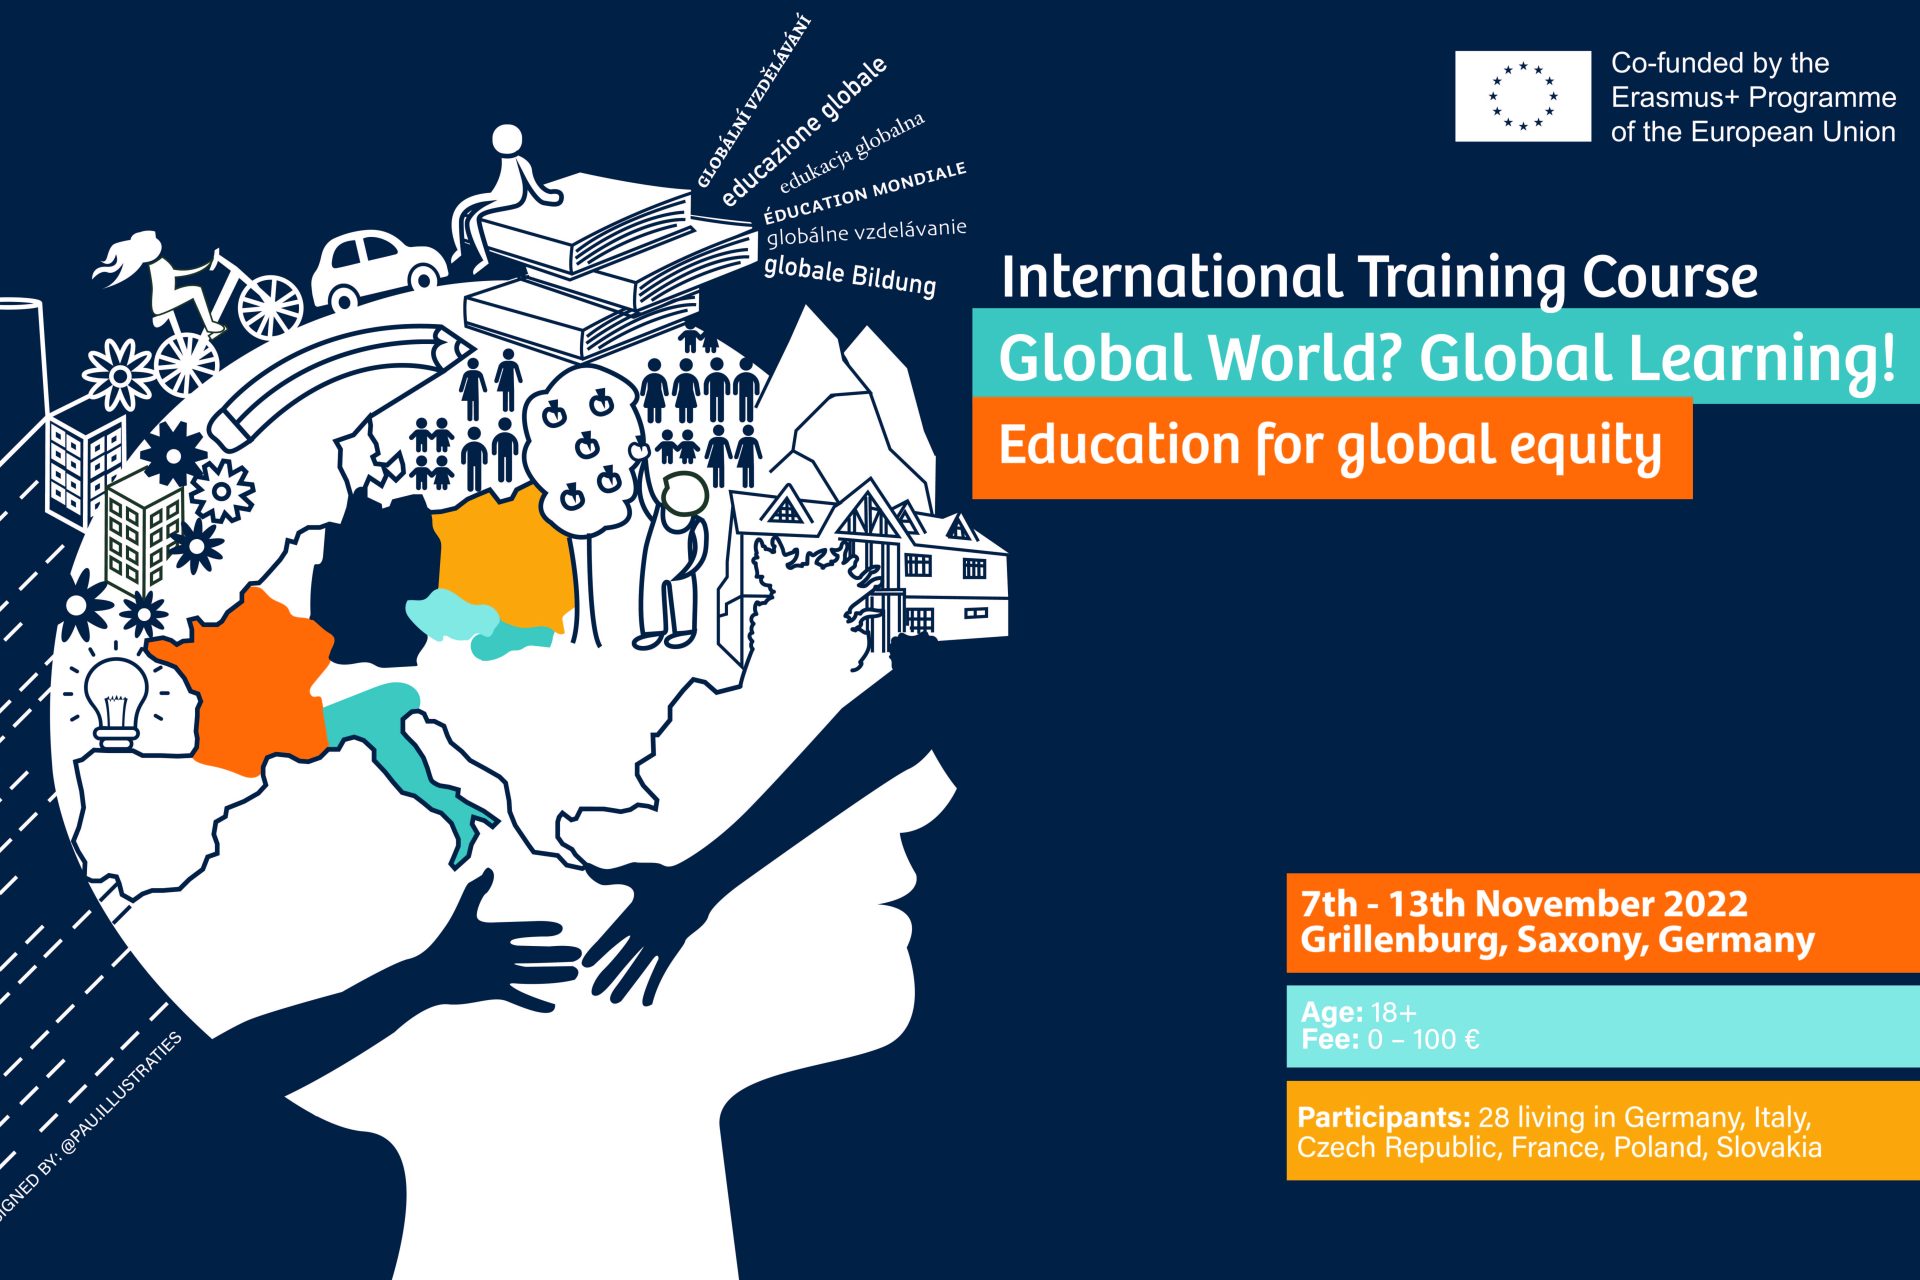 Global World? Global Learning!: Education for global equity